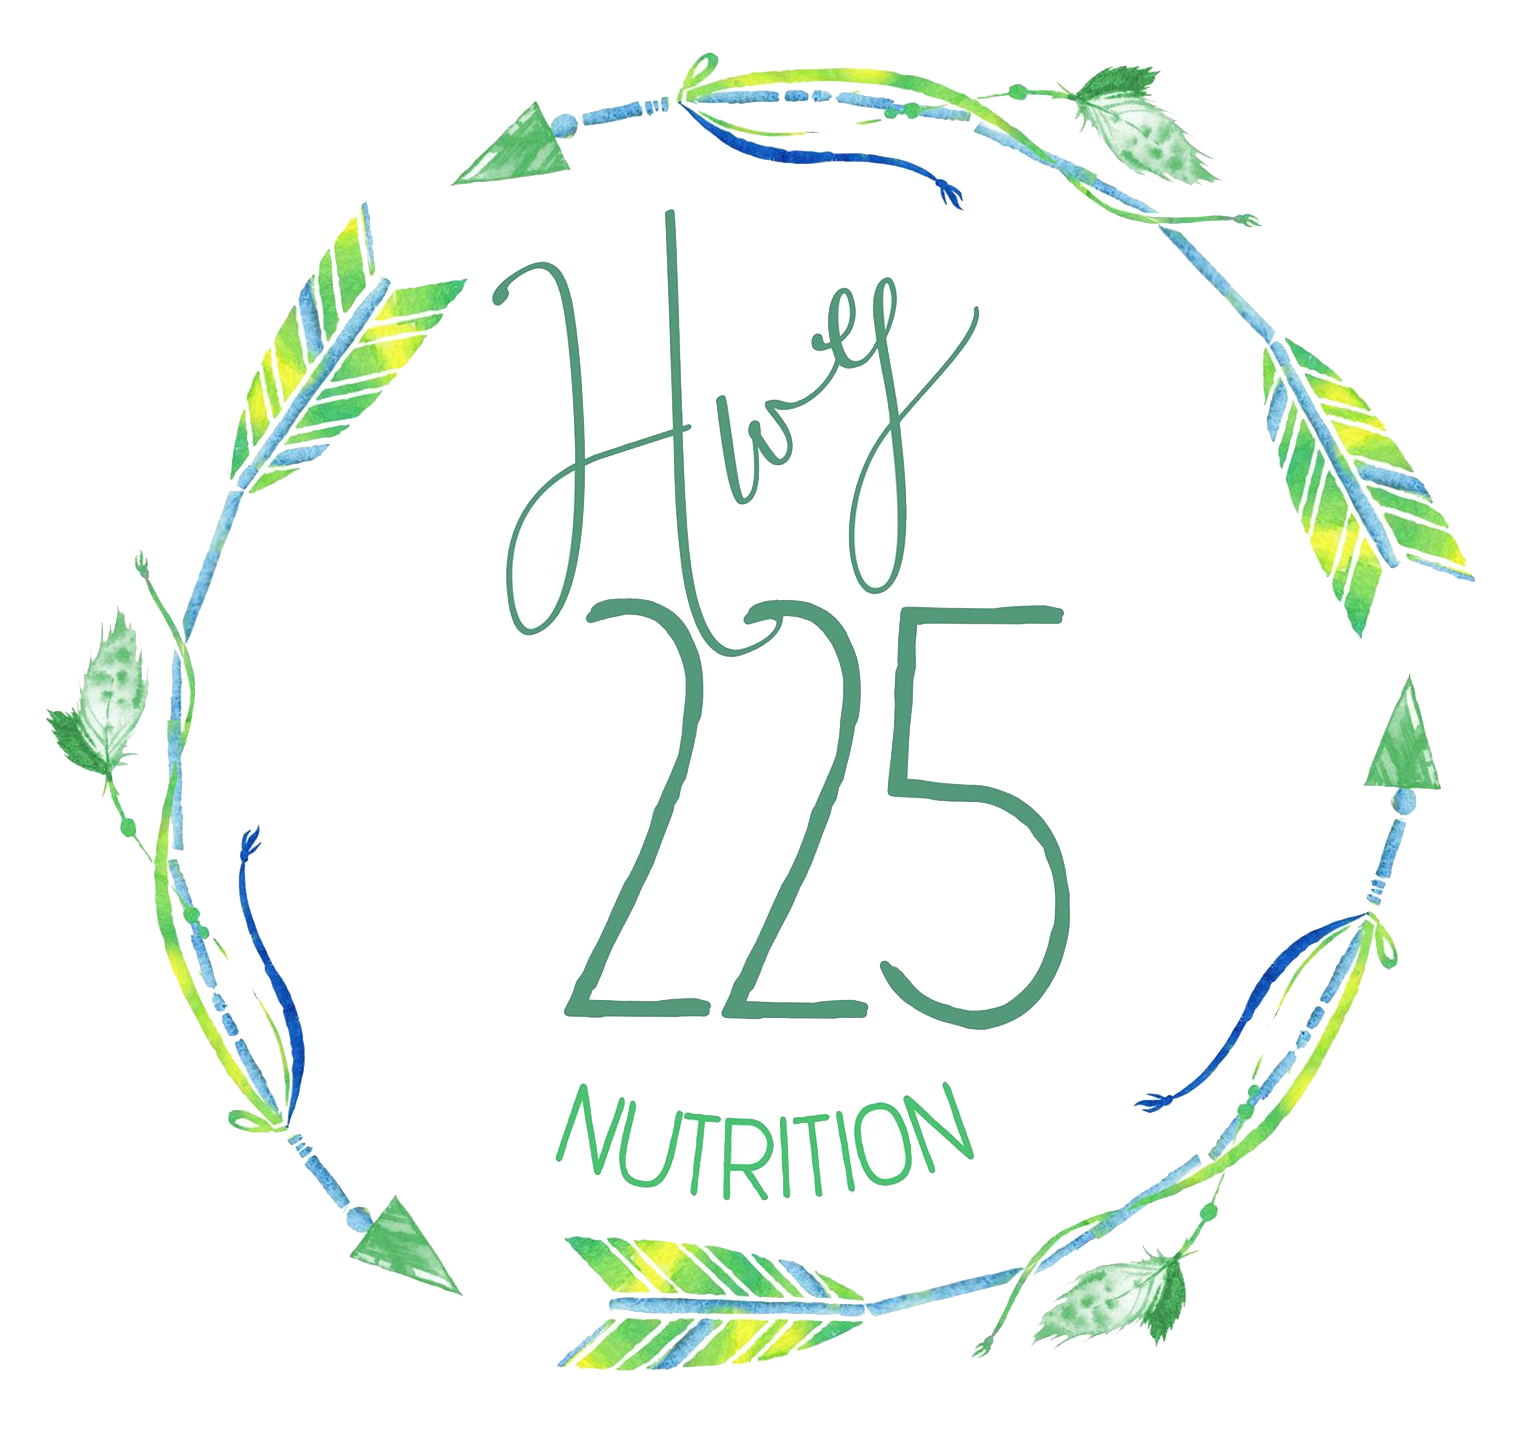 Highway 225 Nutrition